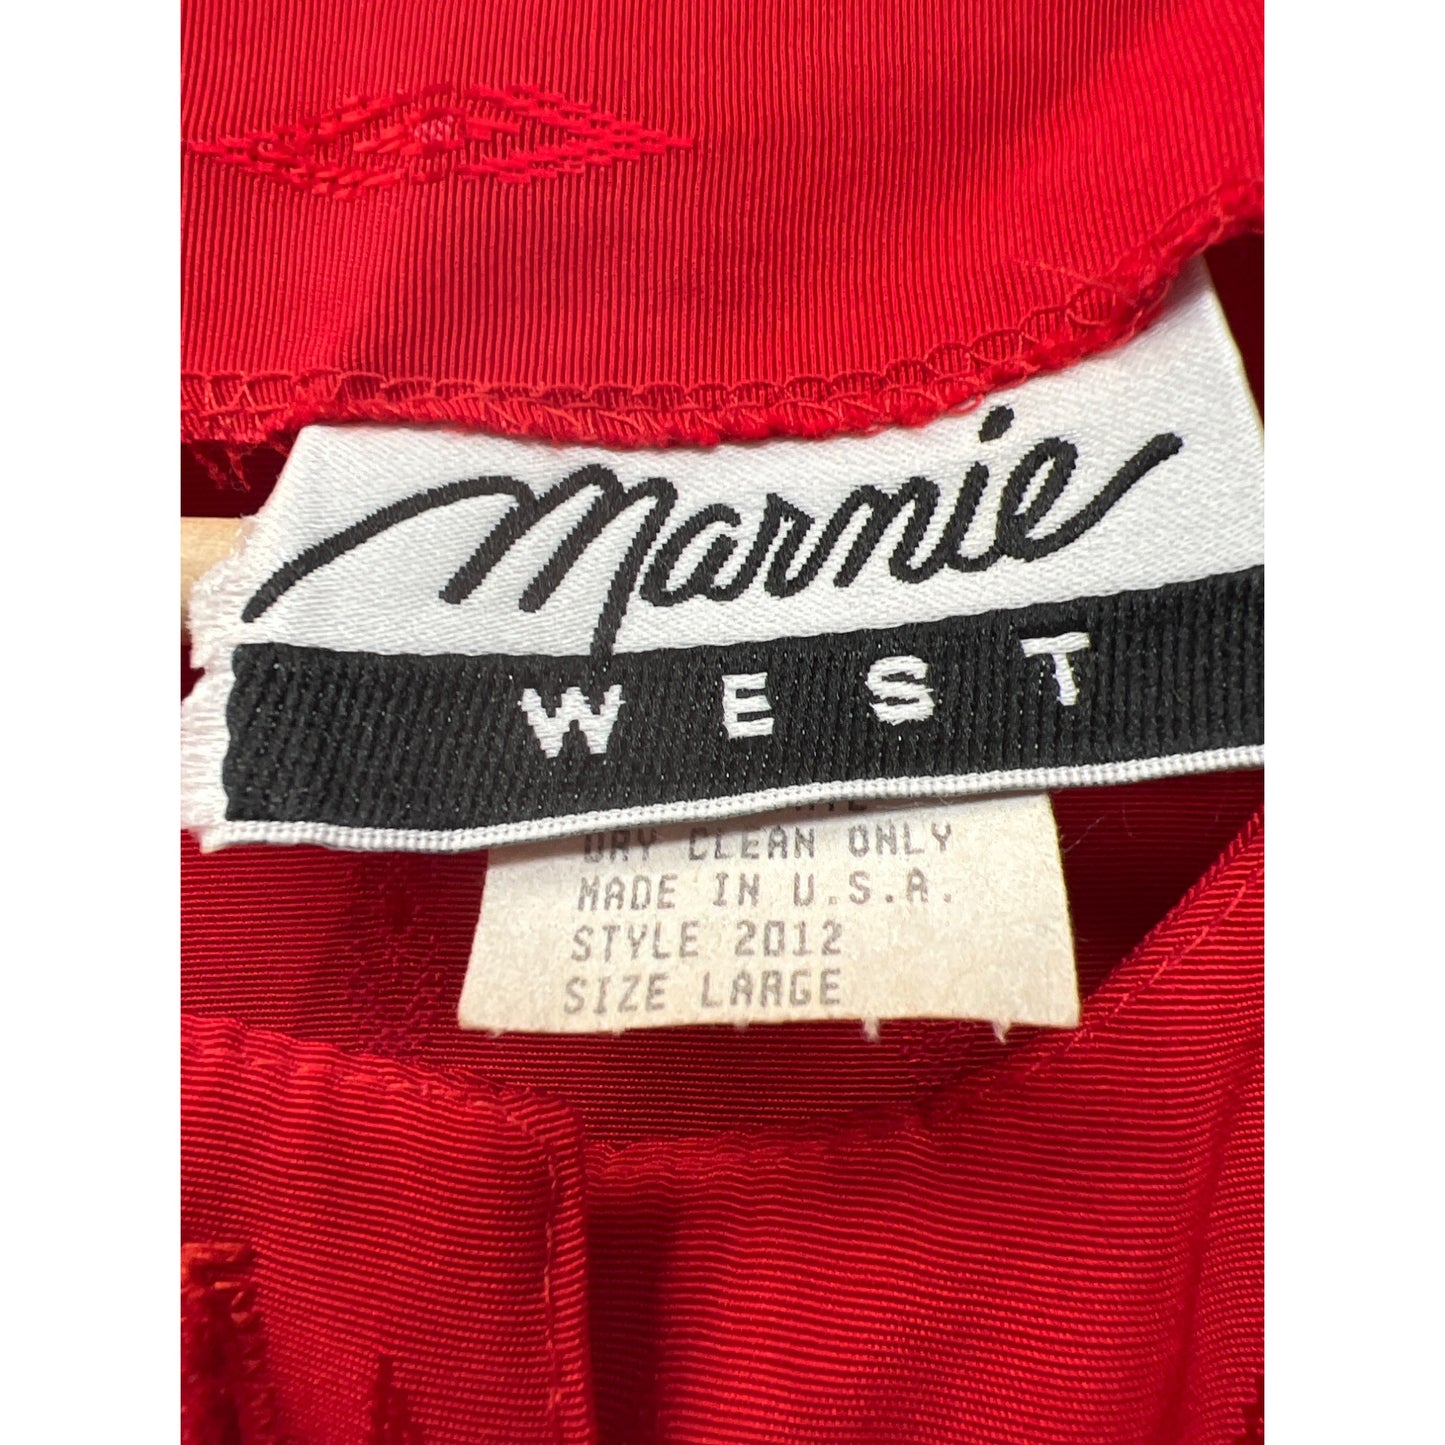 Marnie West Vintage 80's 2 Piece Red Suit Dress